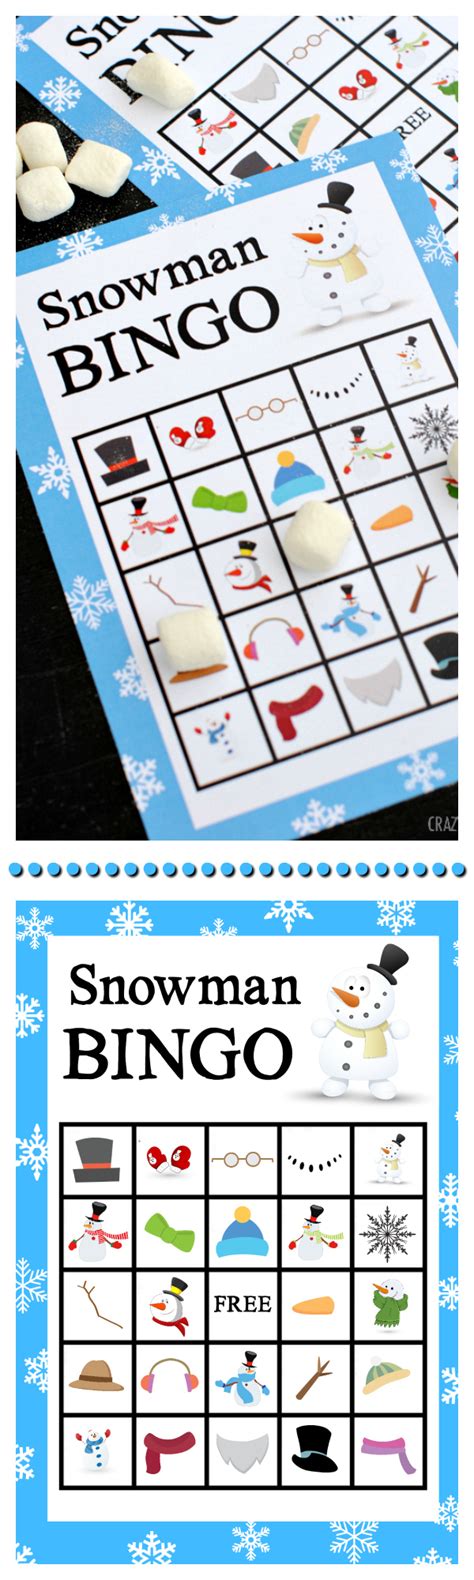 snowman bingo printable cards printable bingo cards